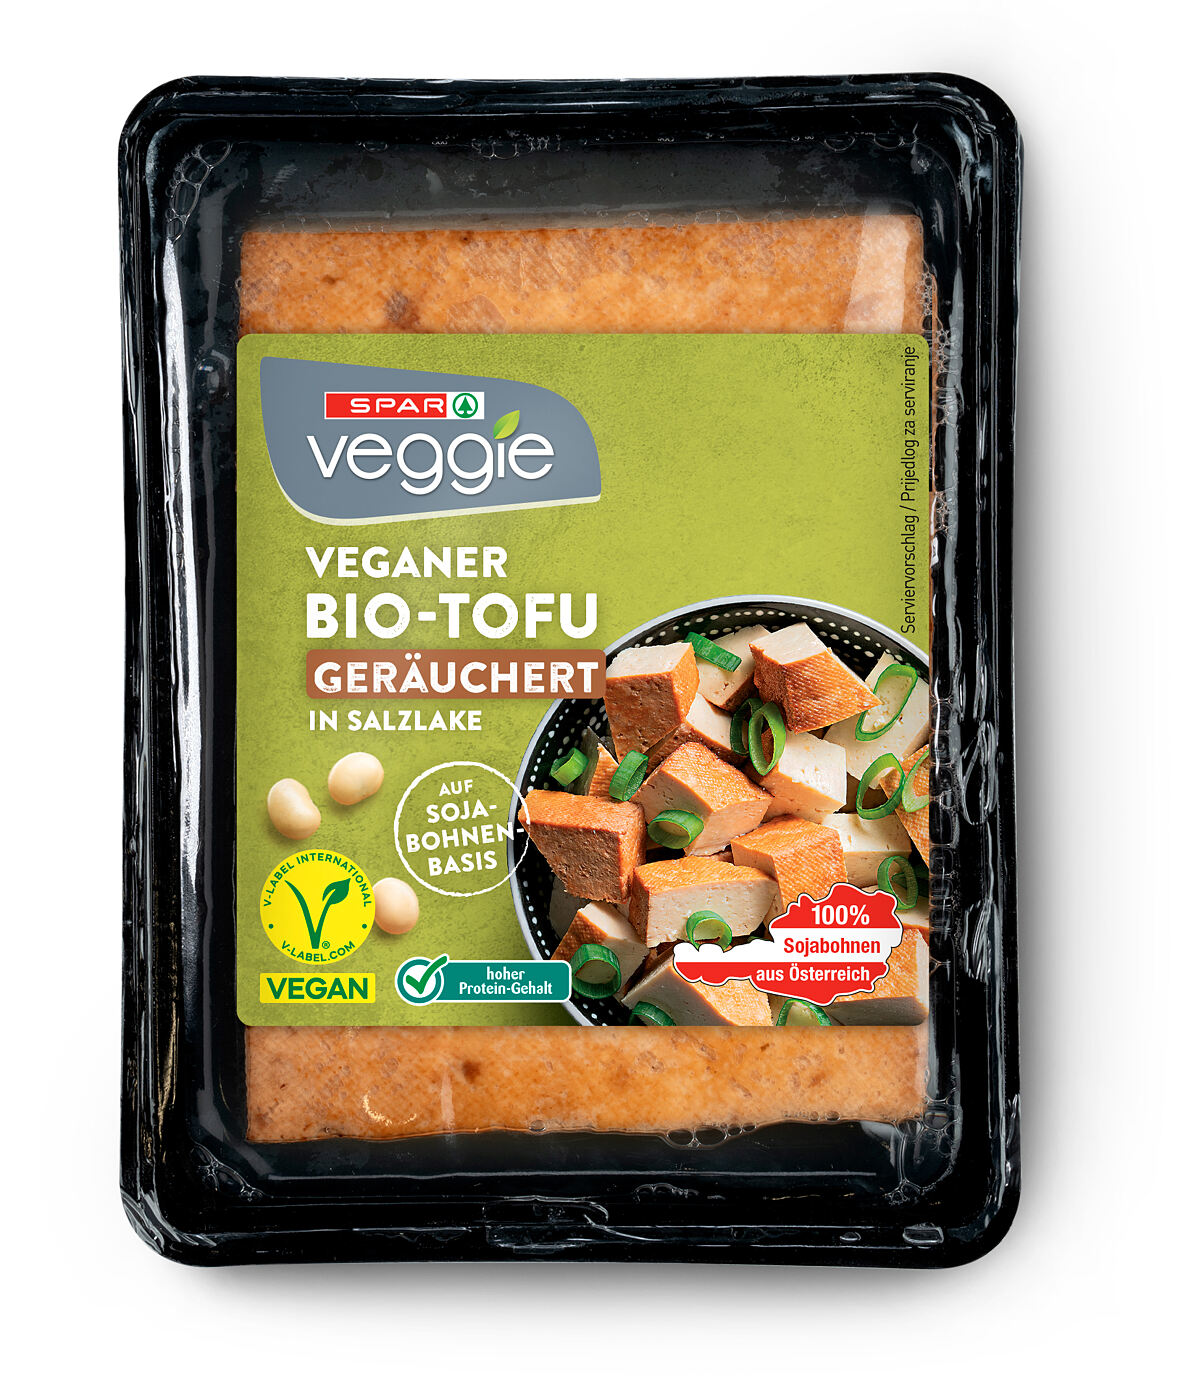 SPAR Veggie Veganer Bio-Tofu geräuchert in Salzlake